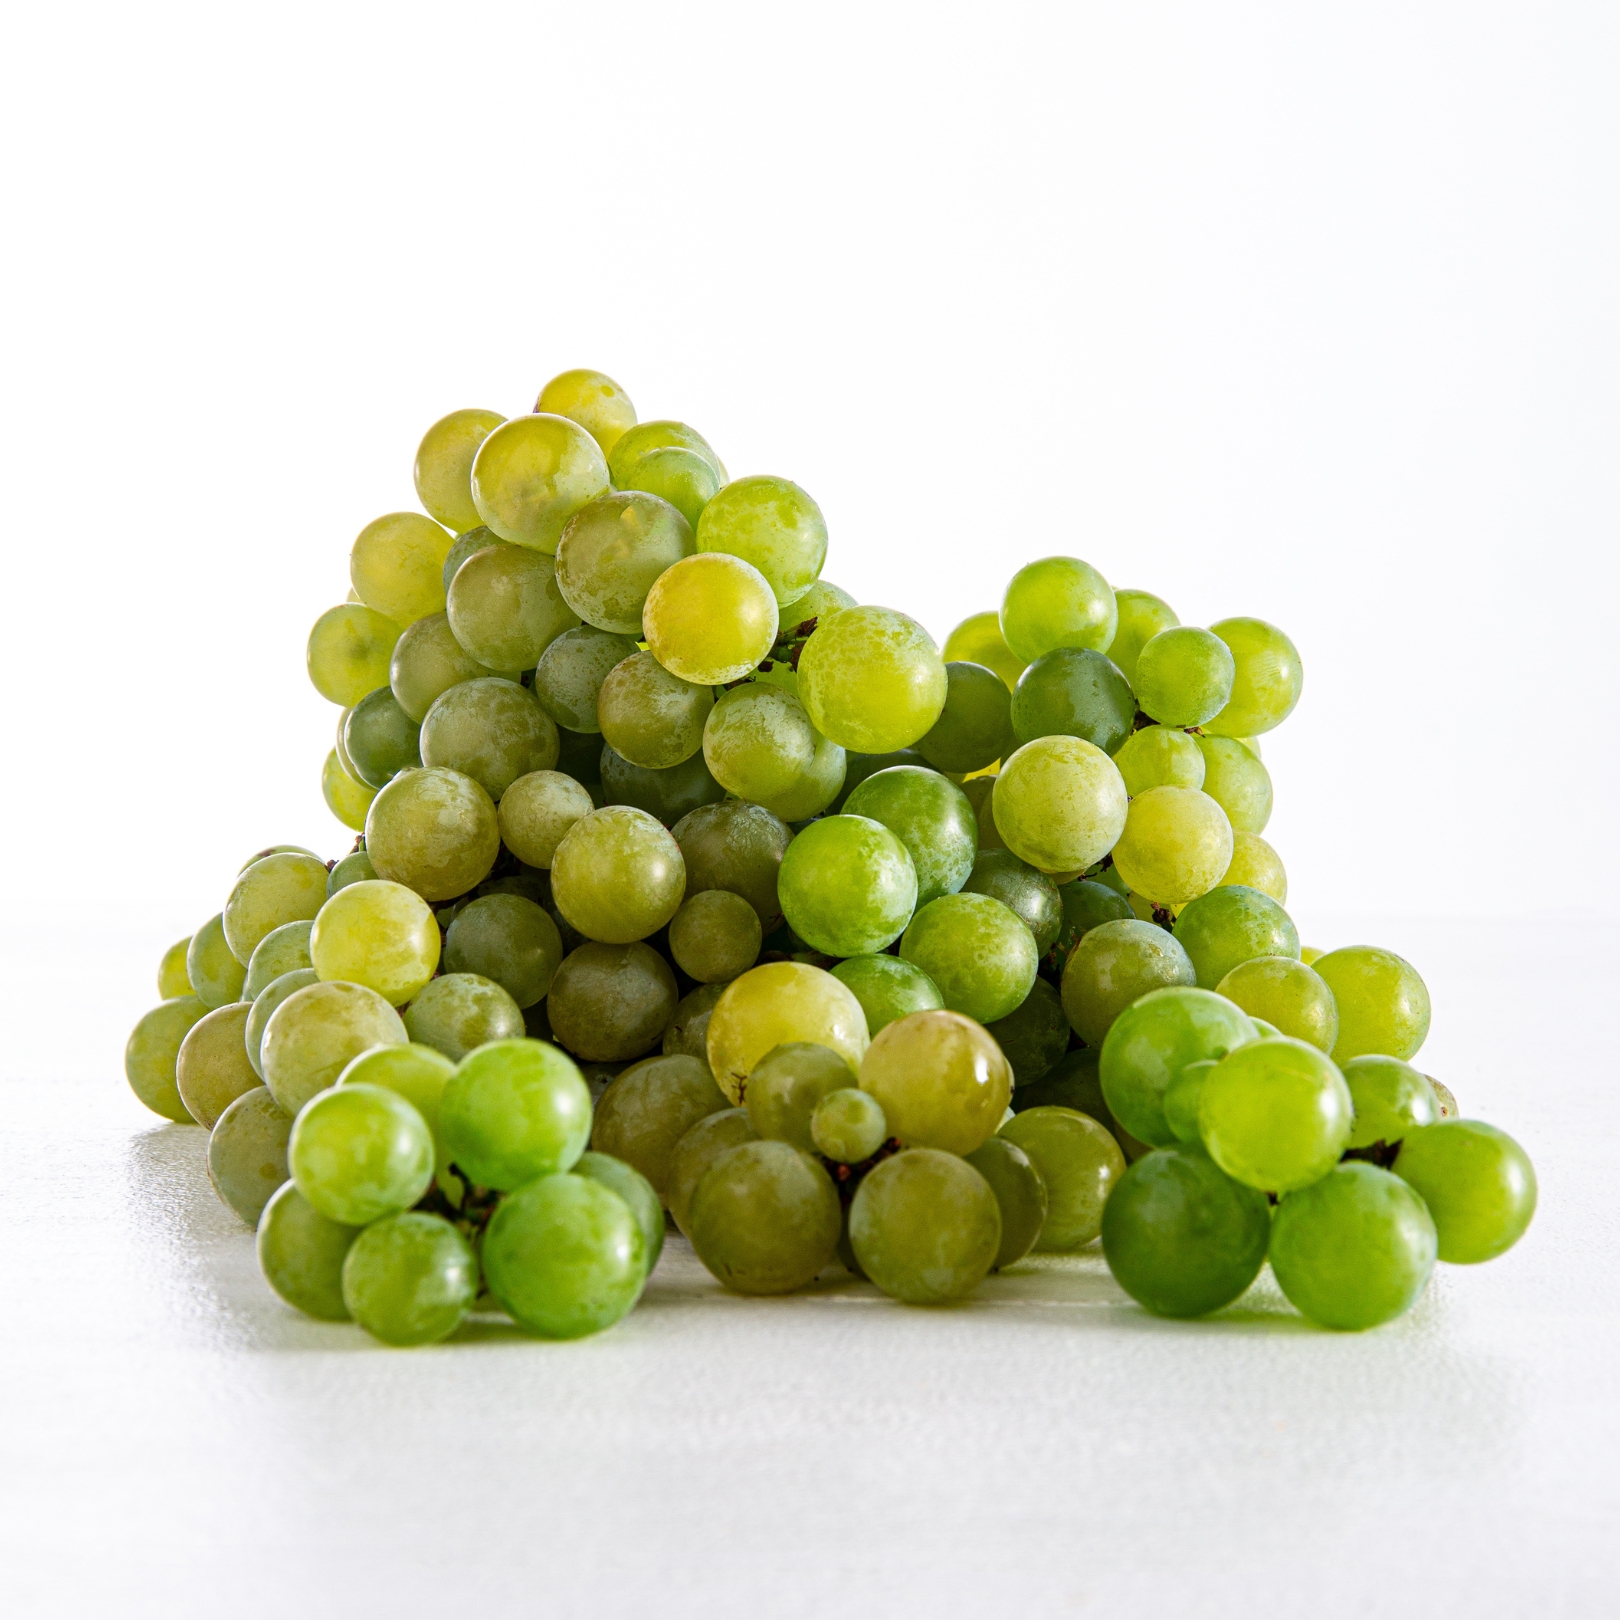 Grapes - White Diamond fruit box delivery nz